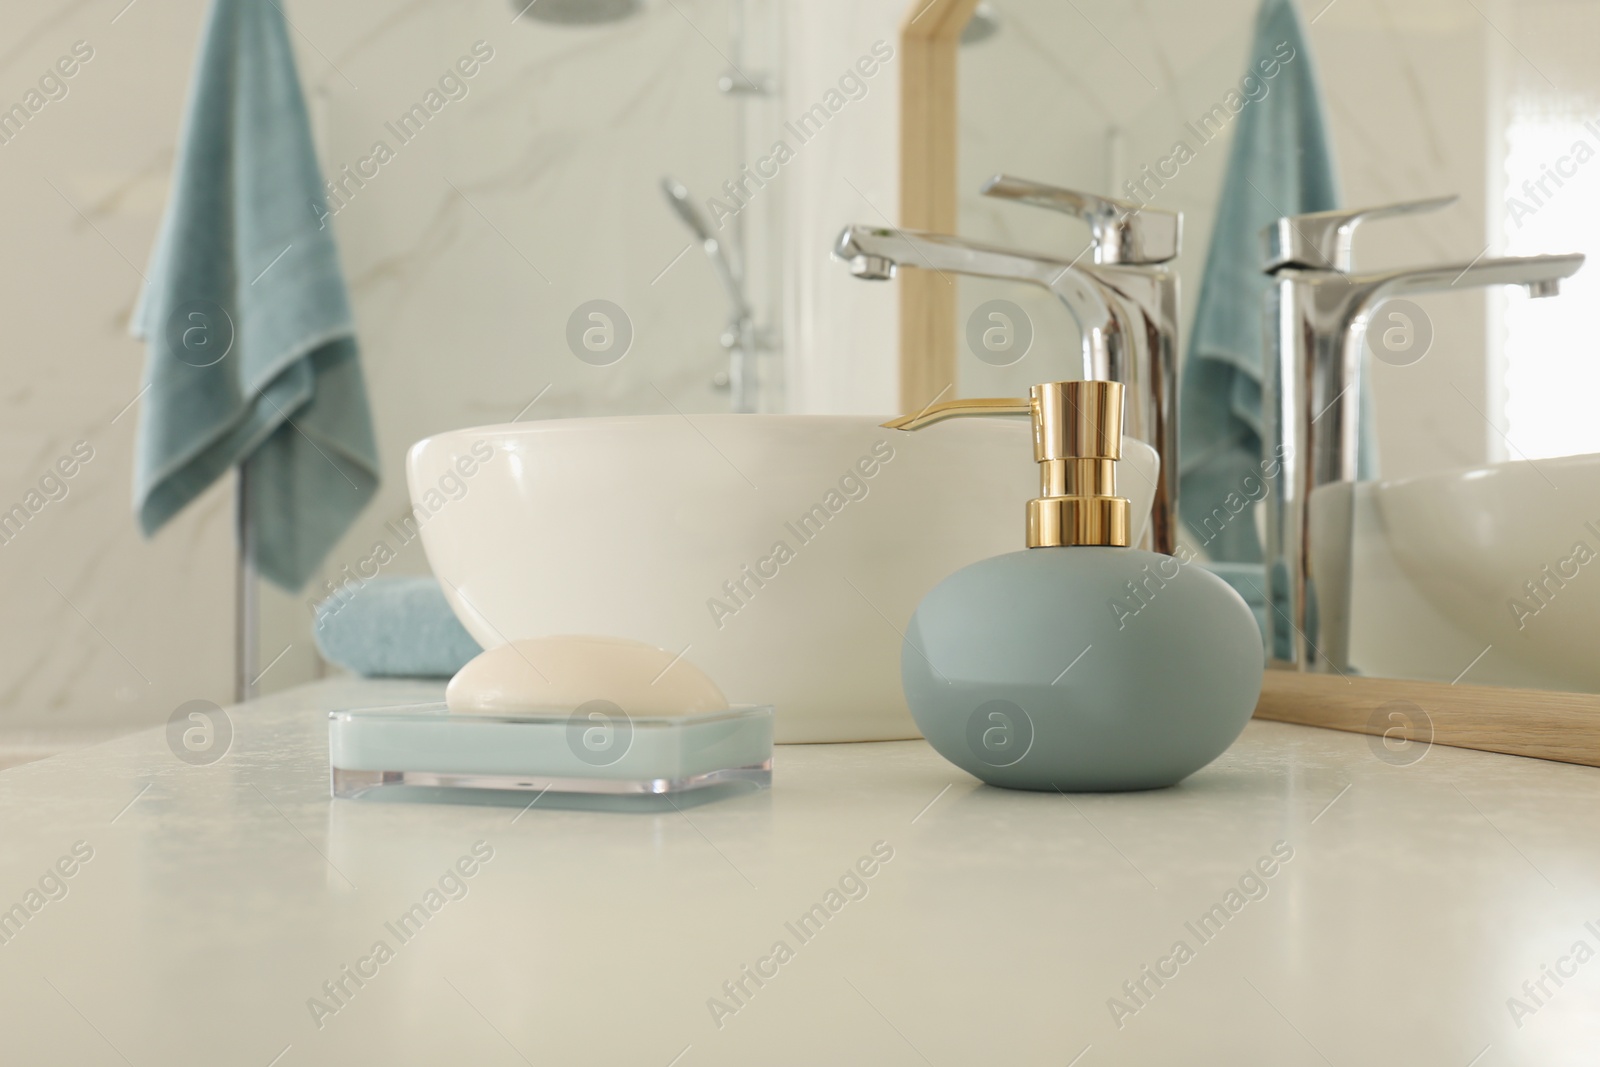 Photo of Toiletries and sink near mirror on white countertop